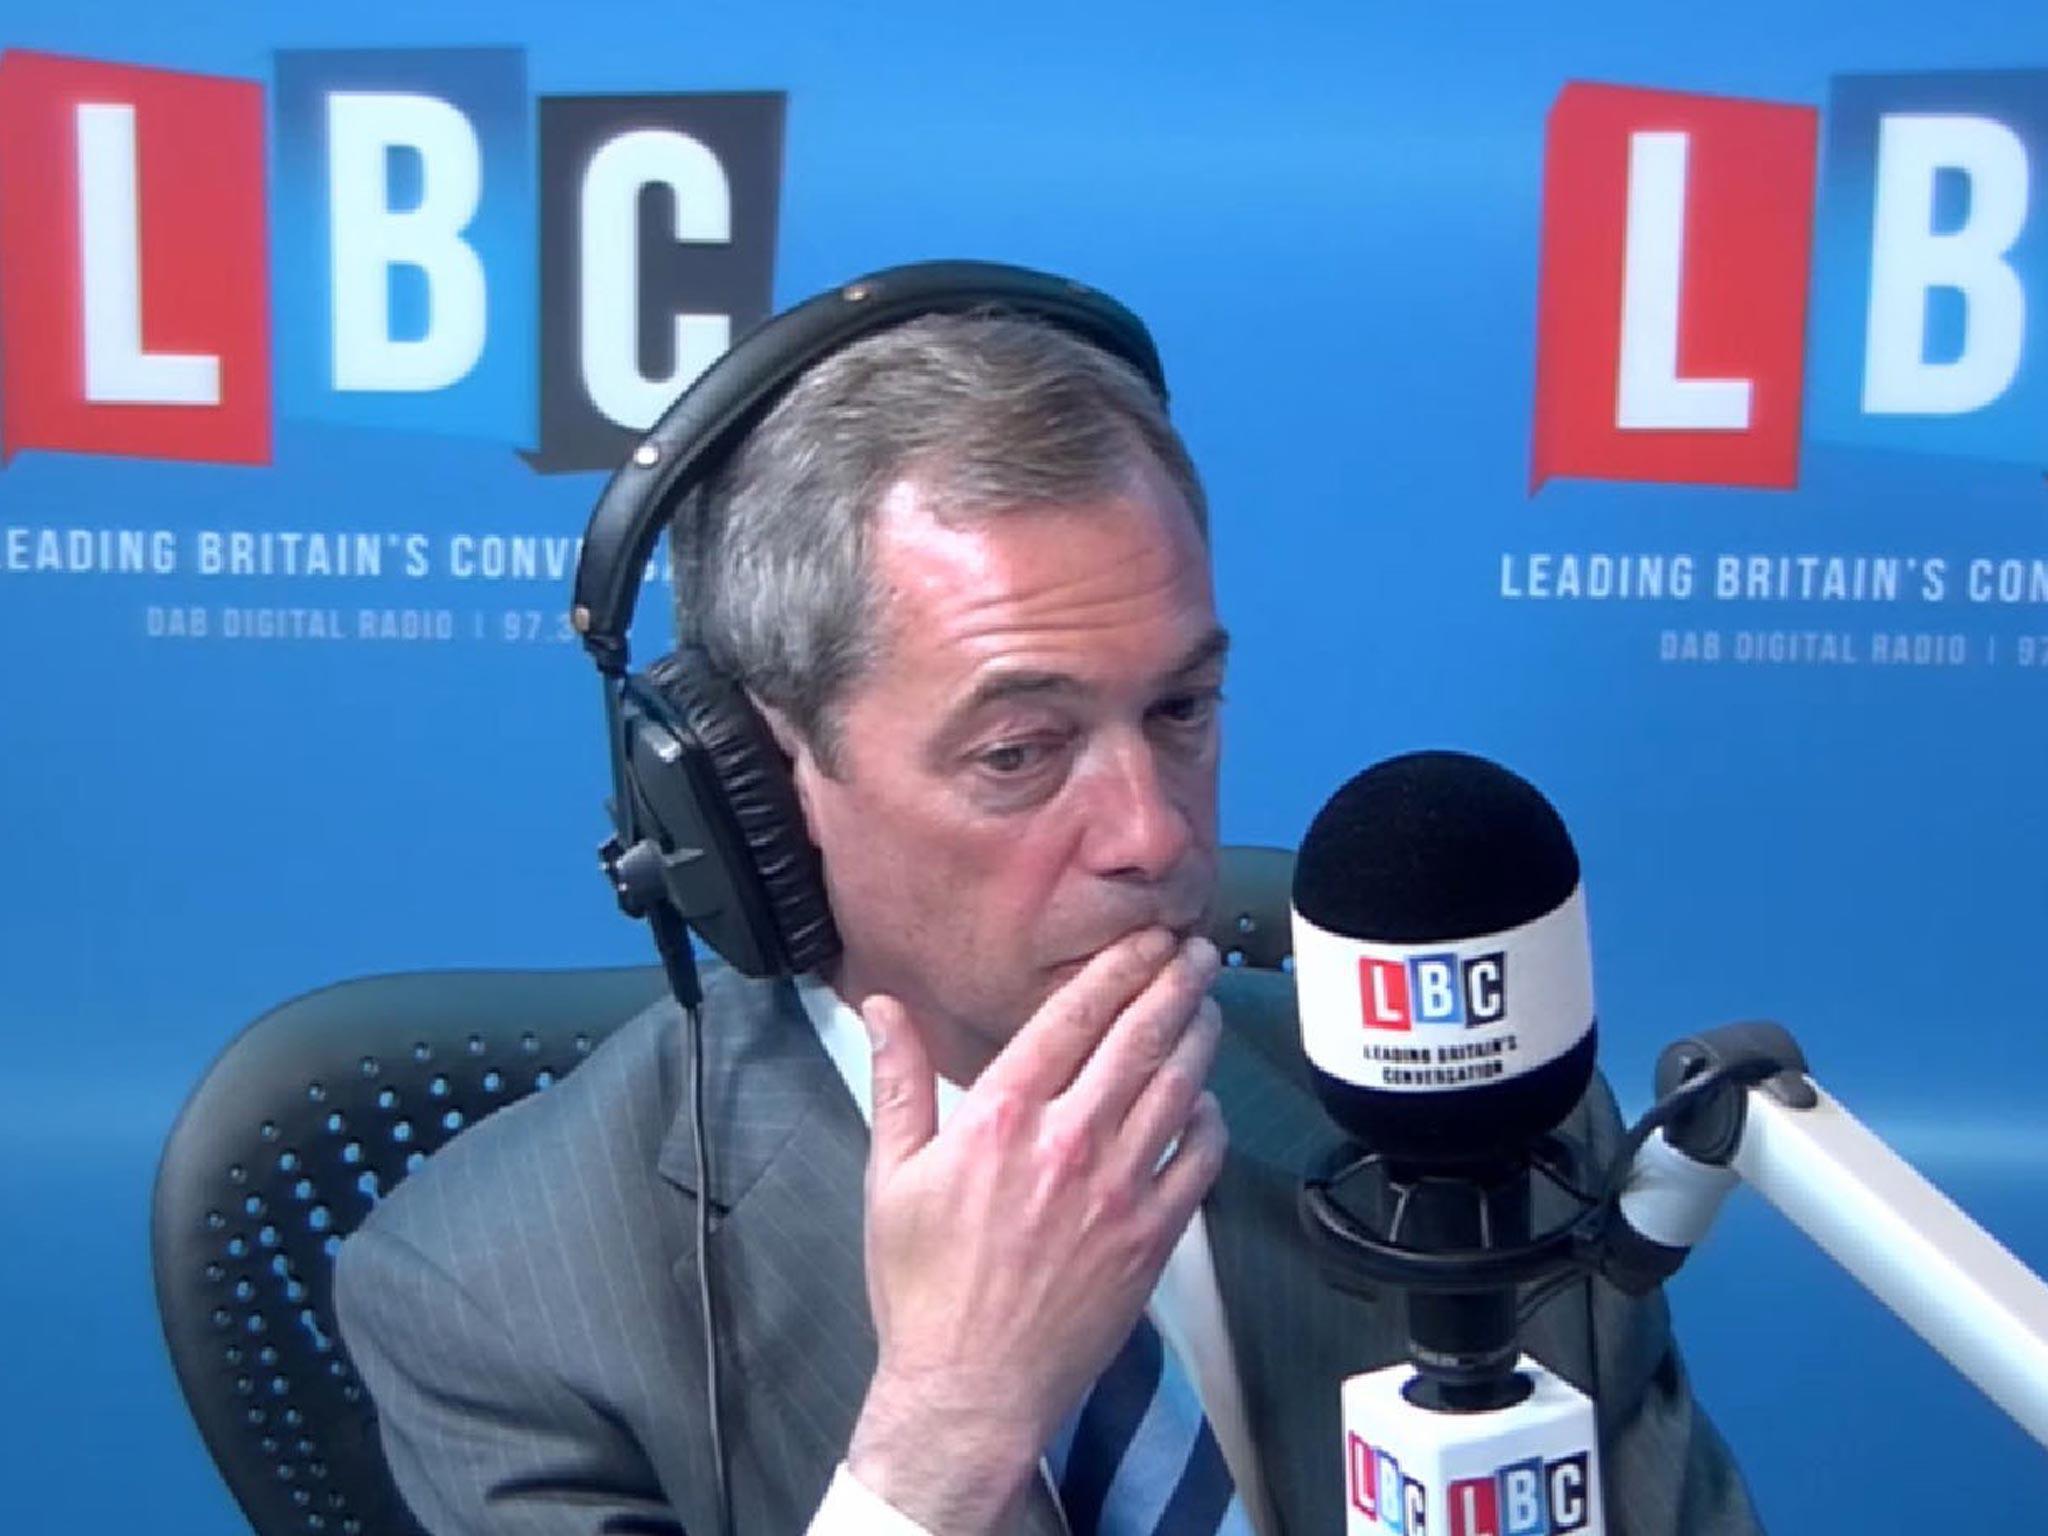 Ukip leader Nigel Farage looked increasingly uncomfortable as he was grilled on LBC